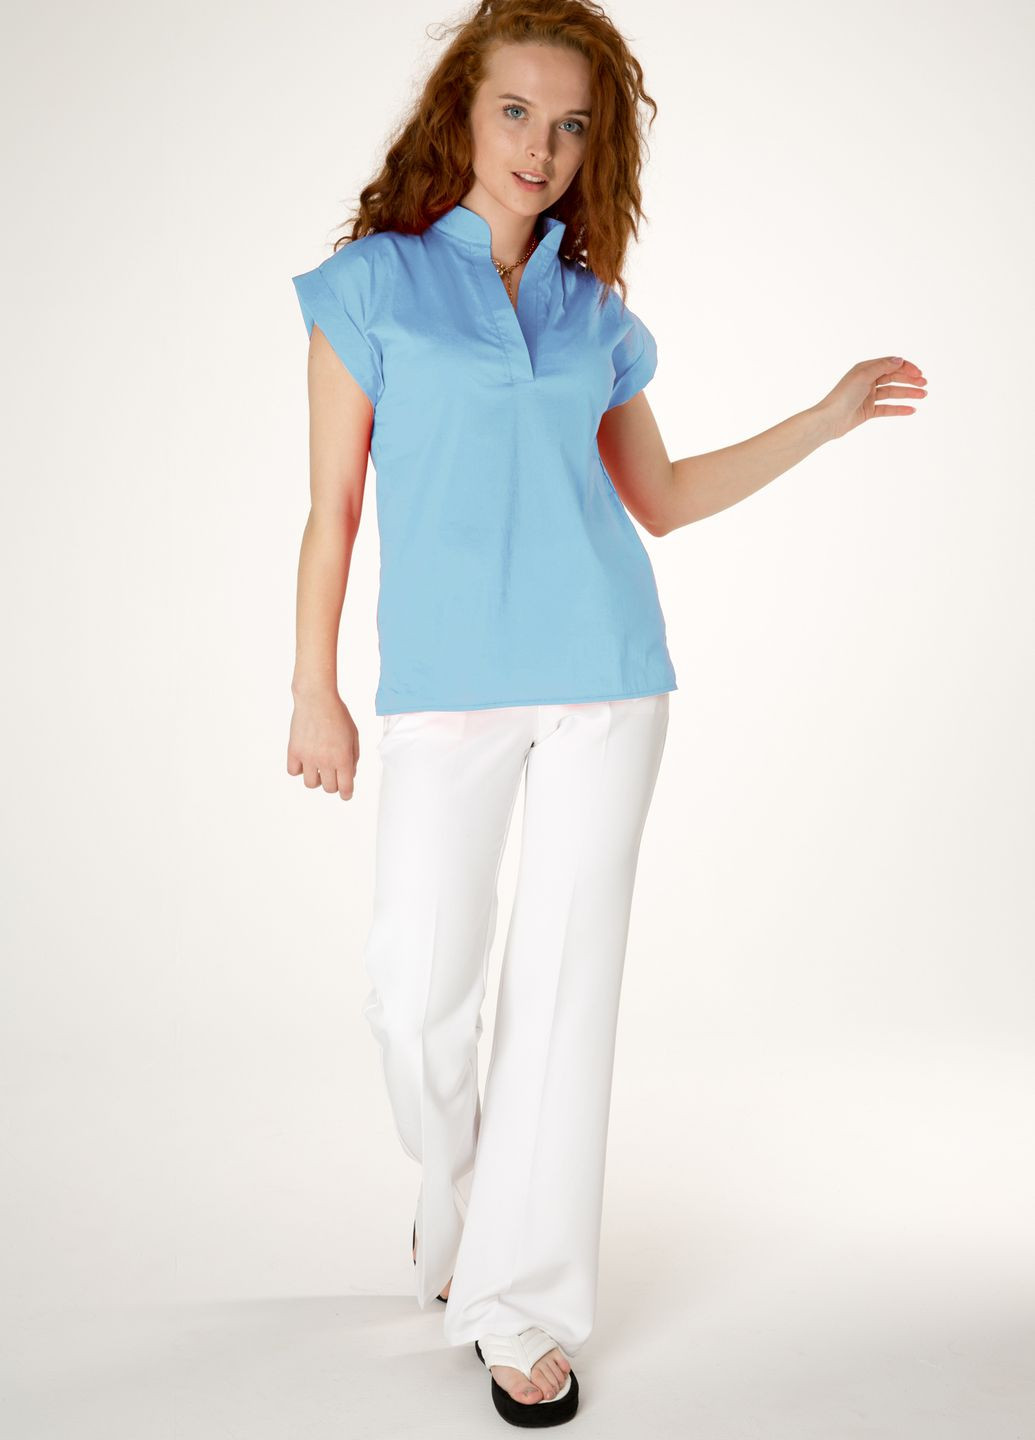 Блакитна стильна ніжна блуза із спущеною лінією плеча INNOE Блуза